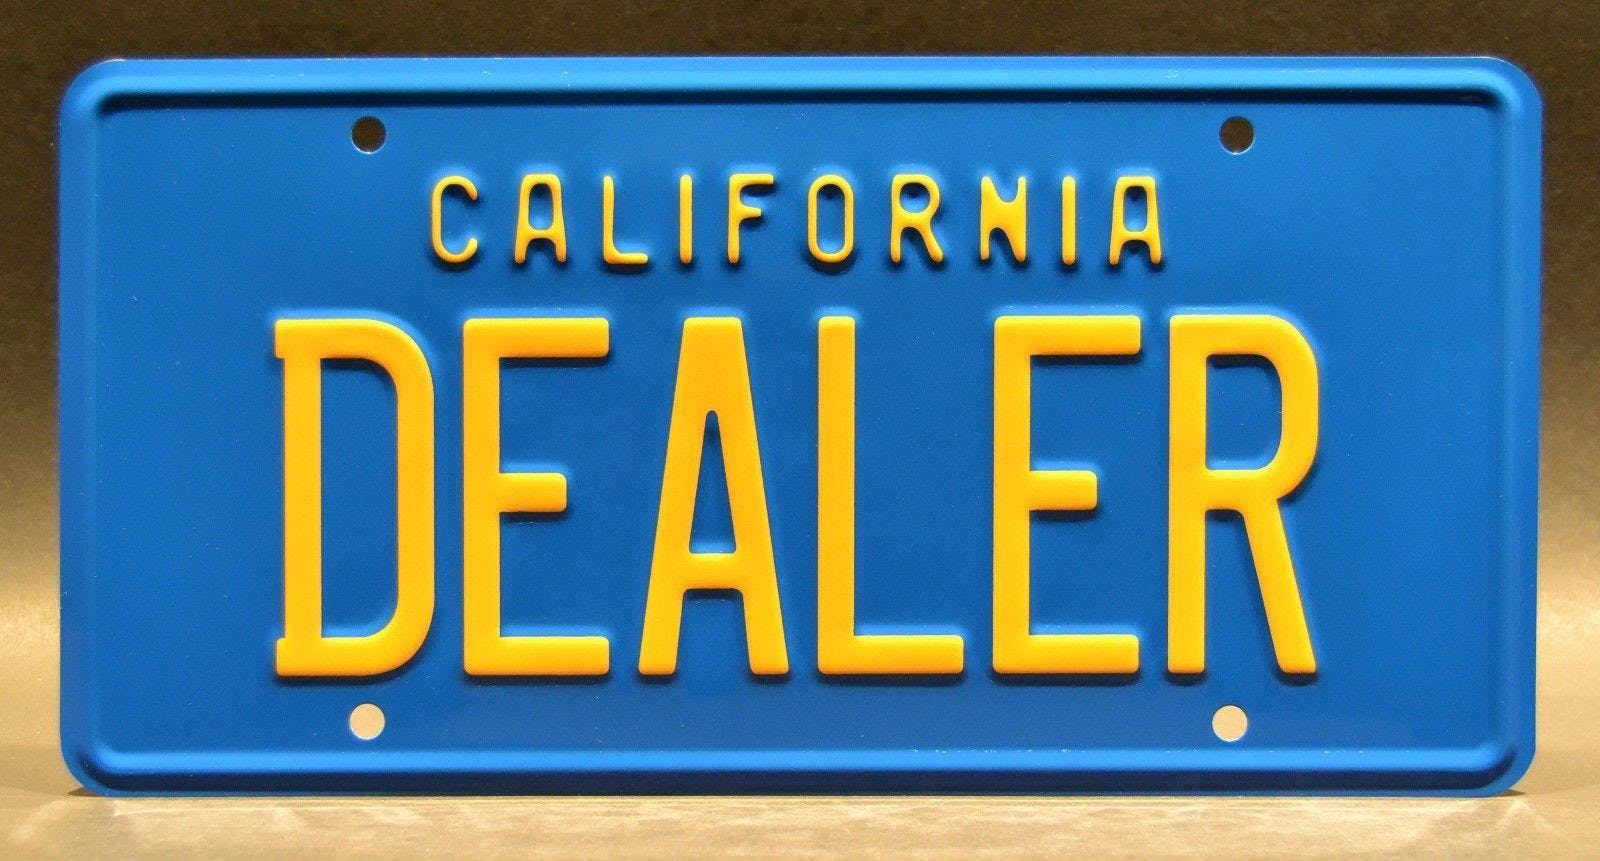 Salinas Car Dealer Licensing School